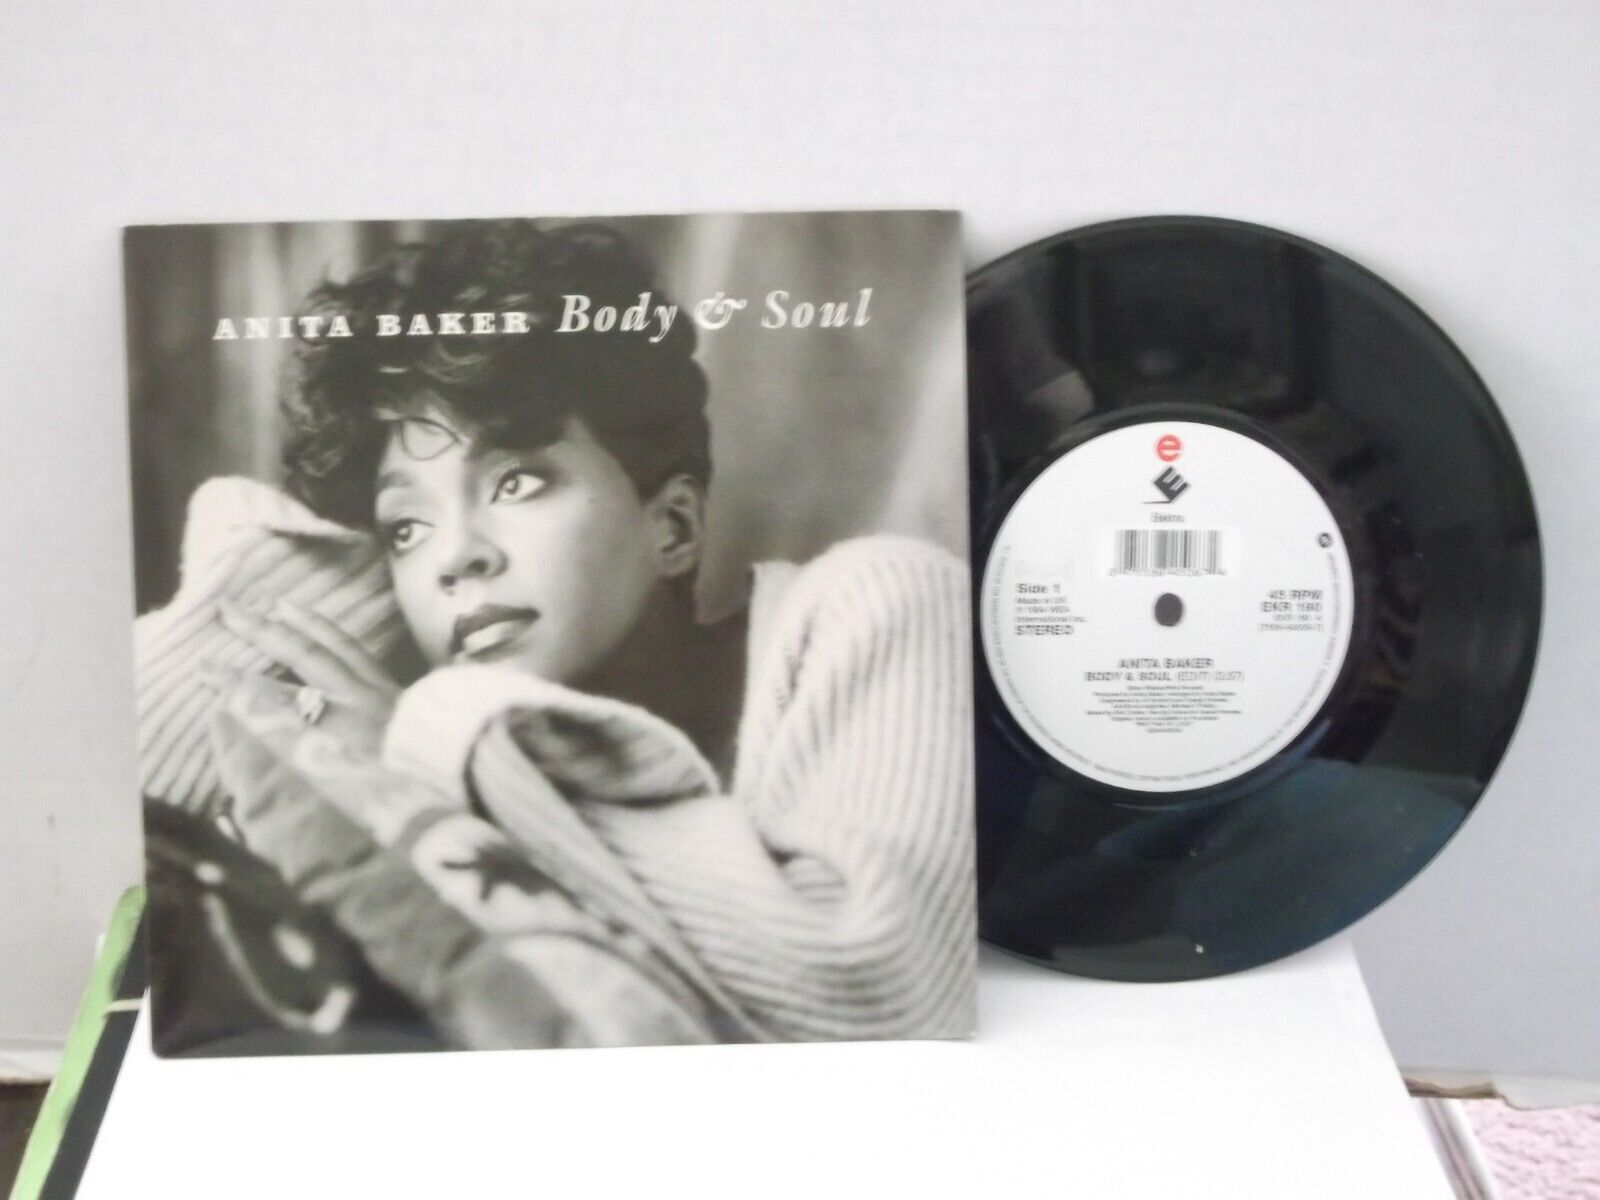 Anita Baker,Elektra,"Body & Soul",UK,7" 45 with P/S,1994 R&B/Soul classic,Mint